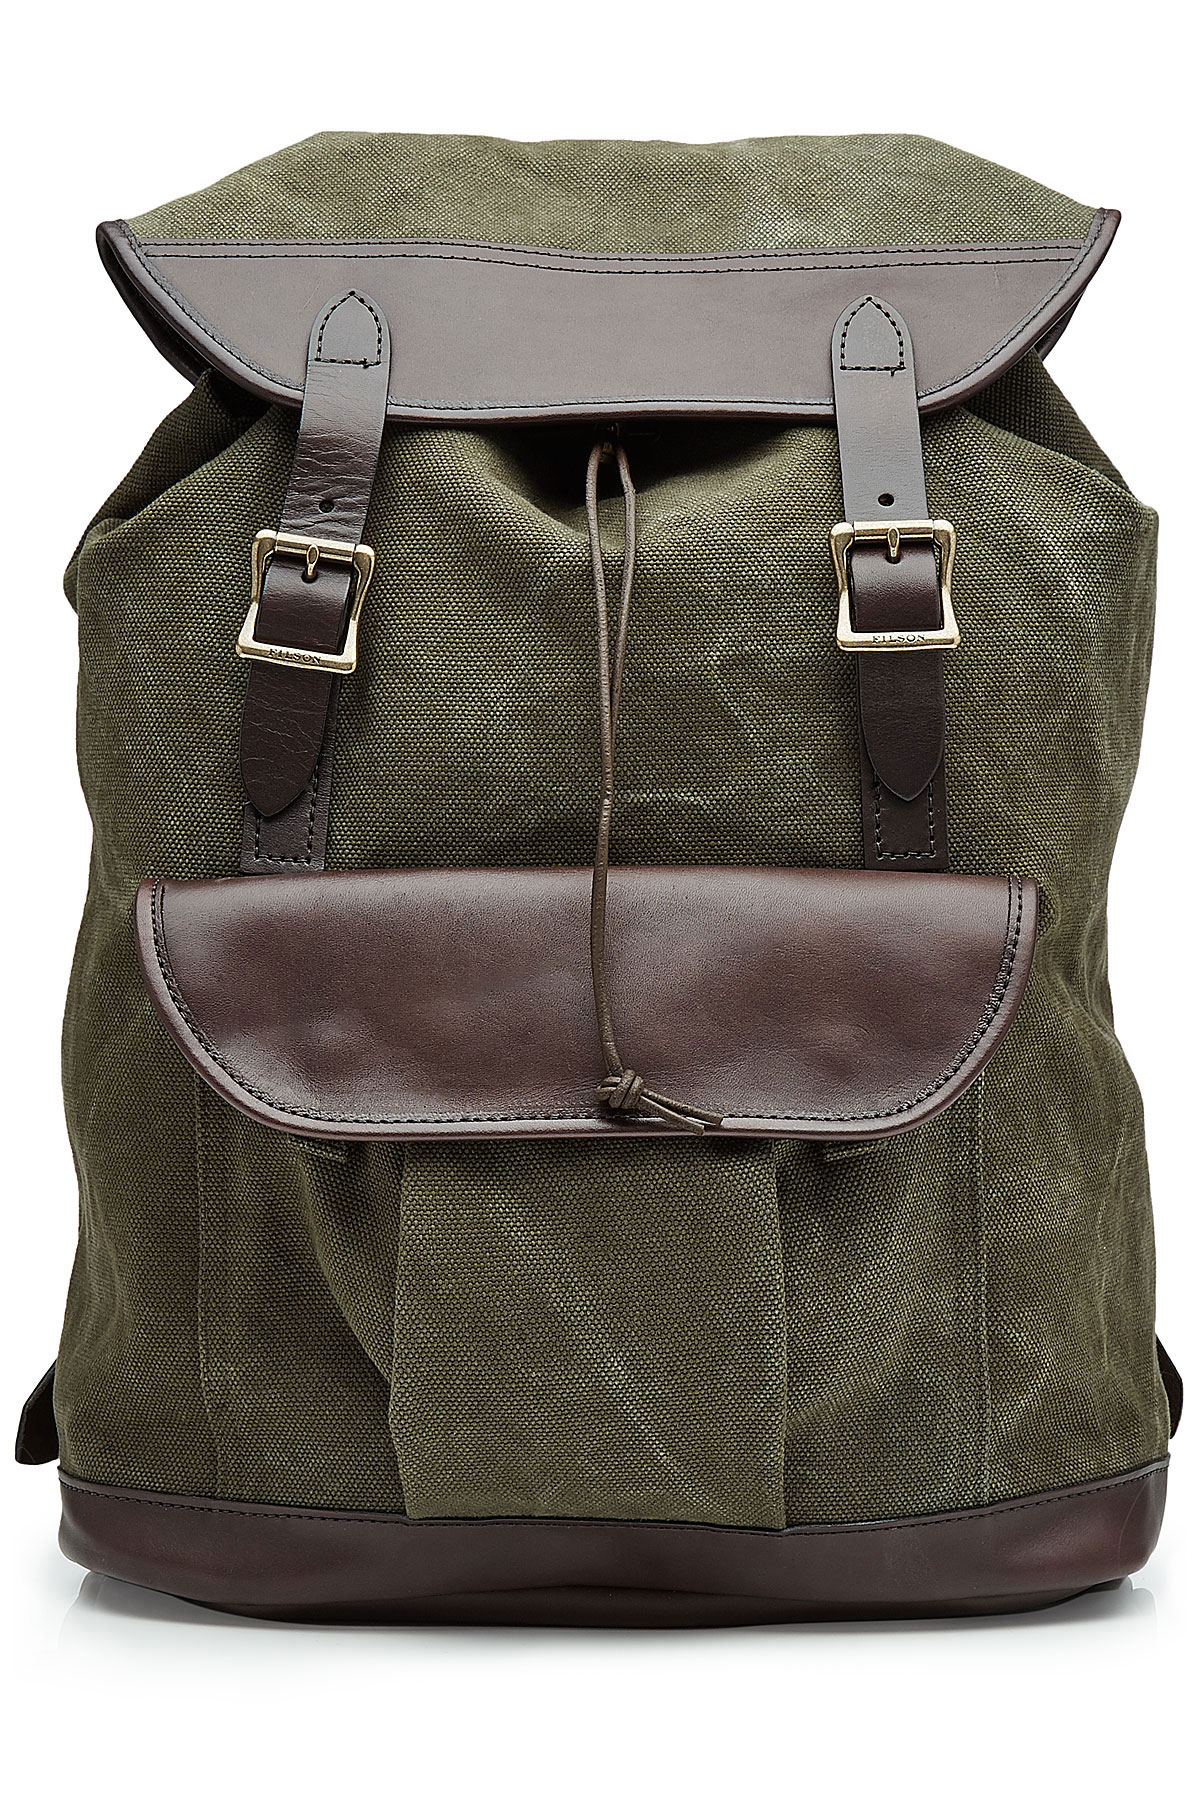 Military inspired bagpack from Filson